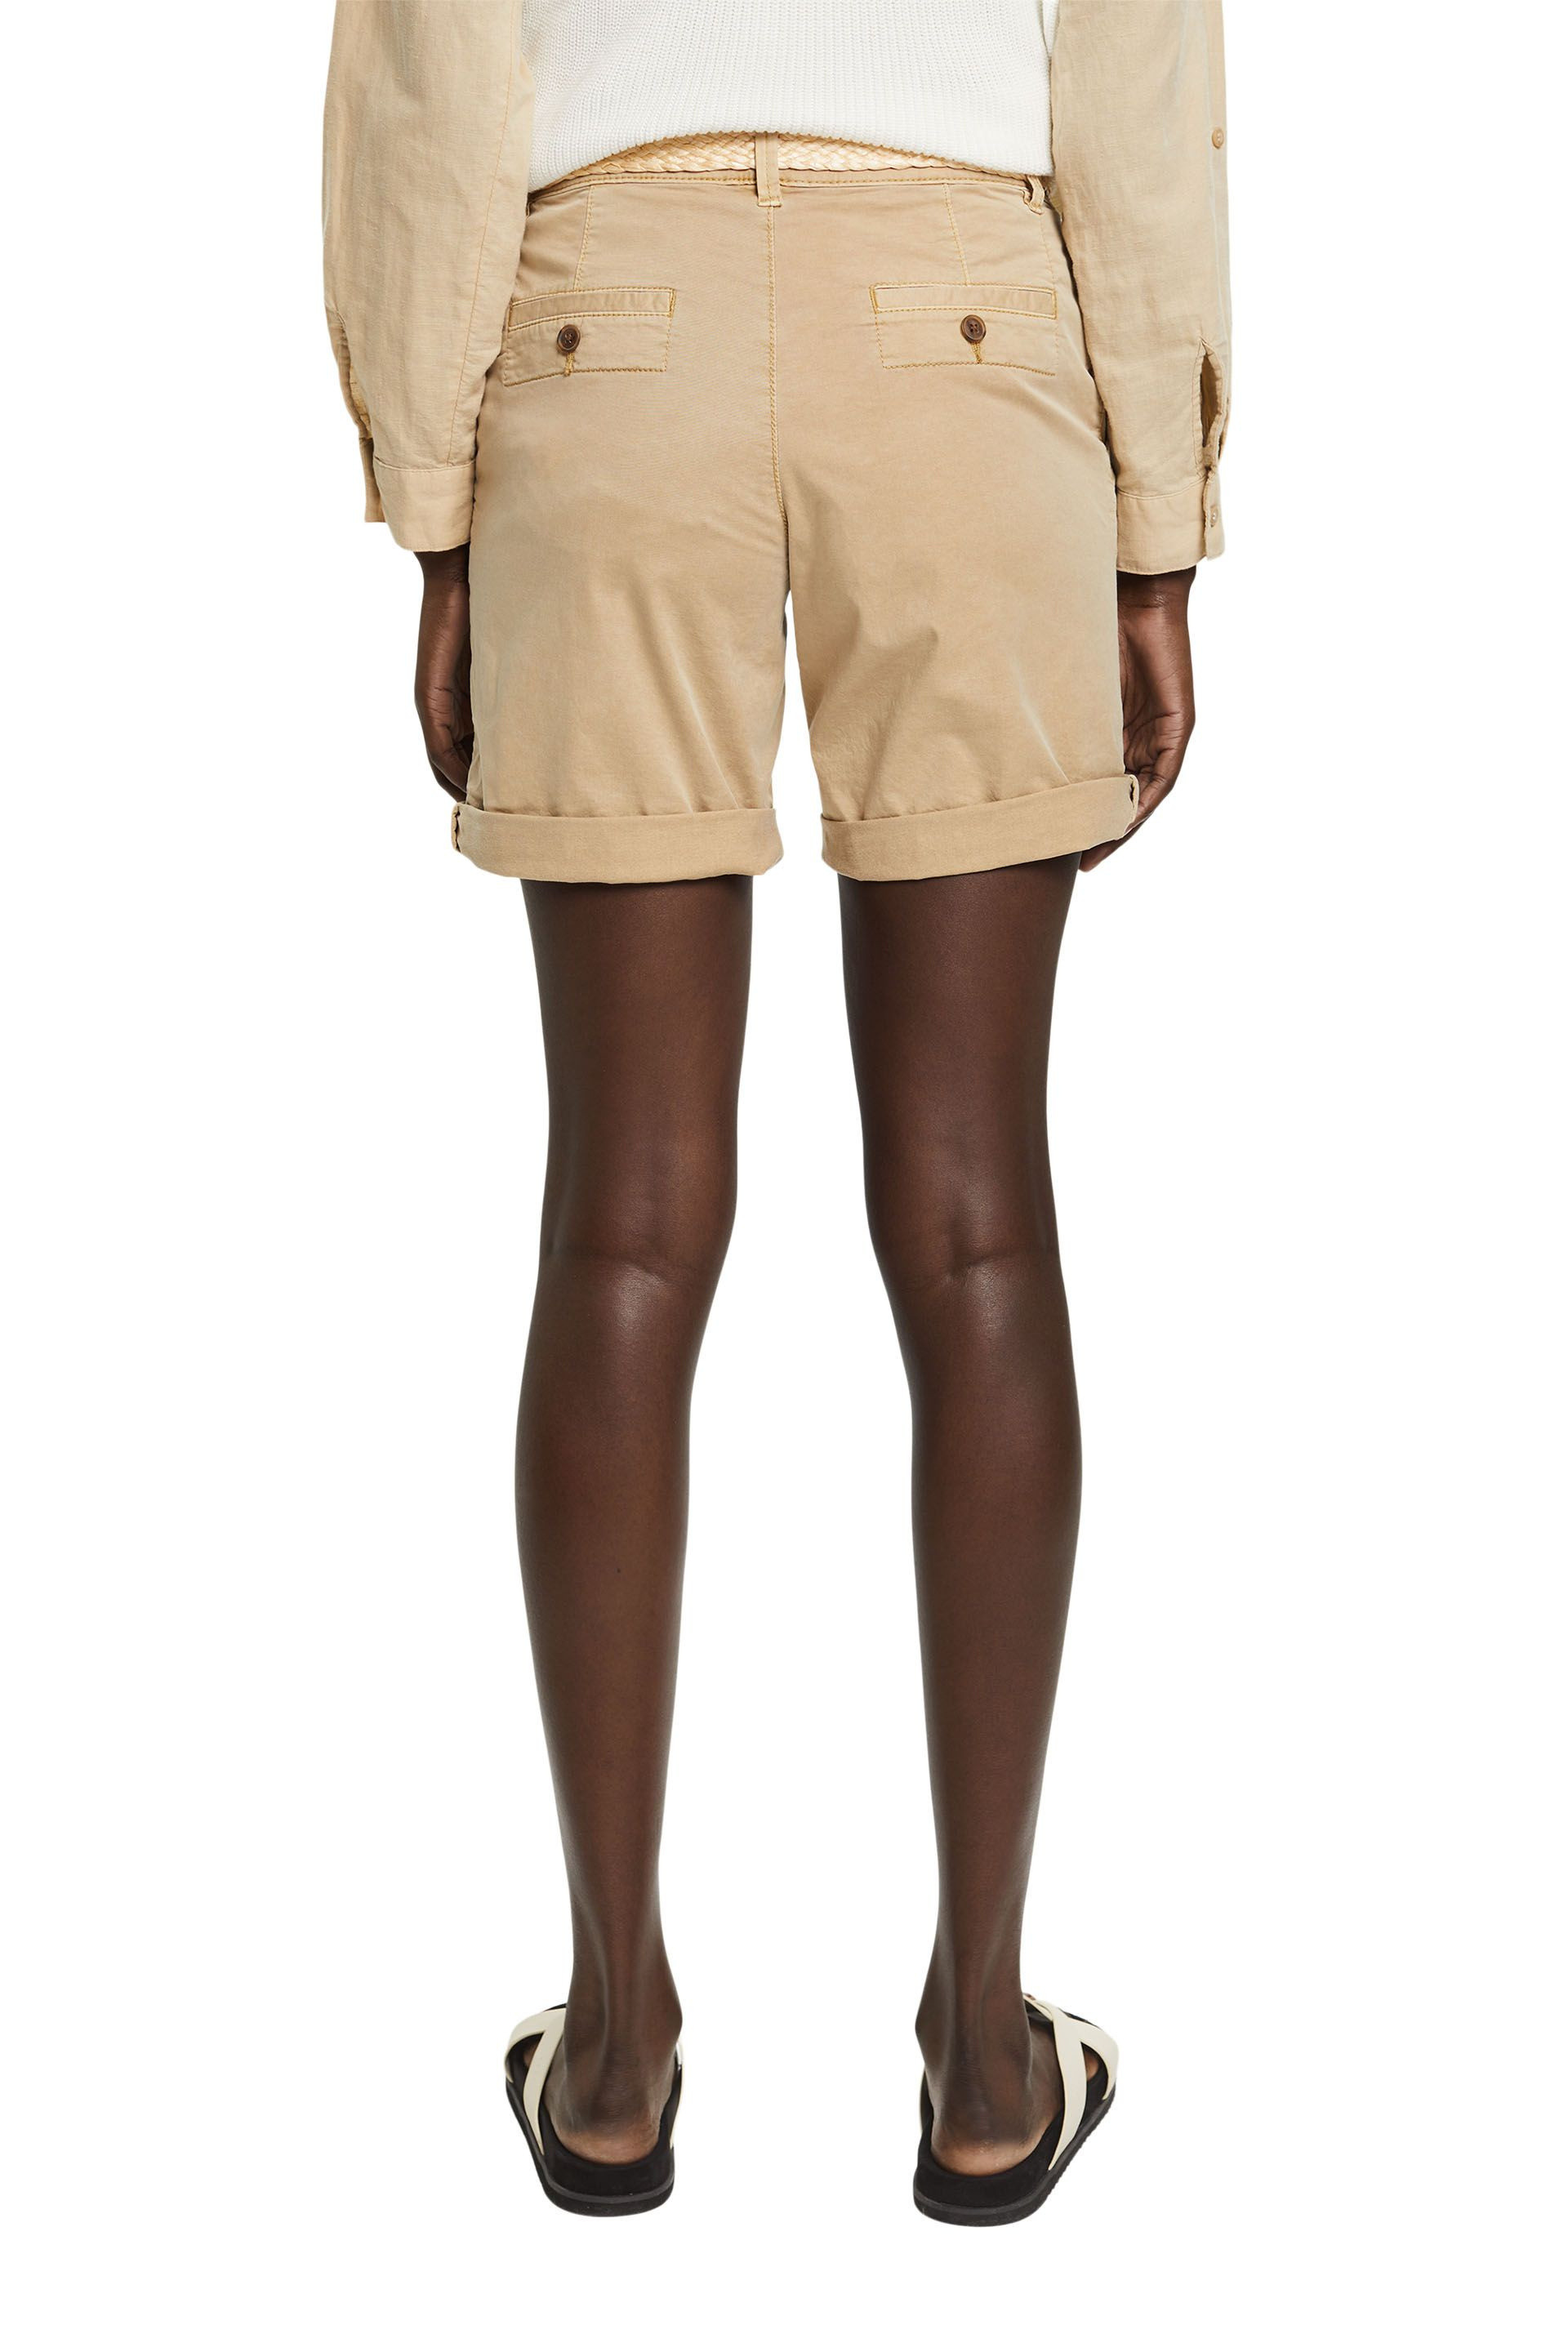 Esprit - Shorts con cintura intrecciata in rafia, Sabbia, large image number 3